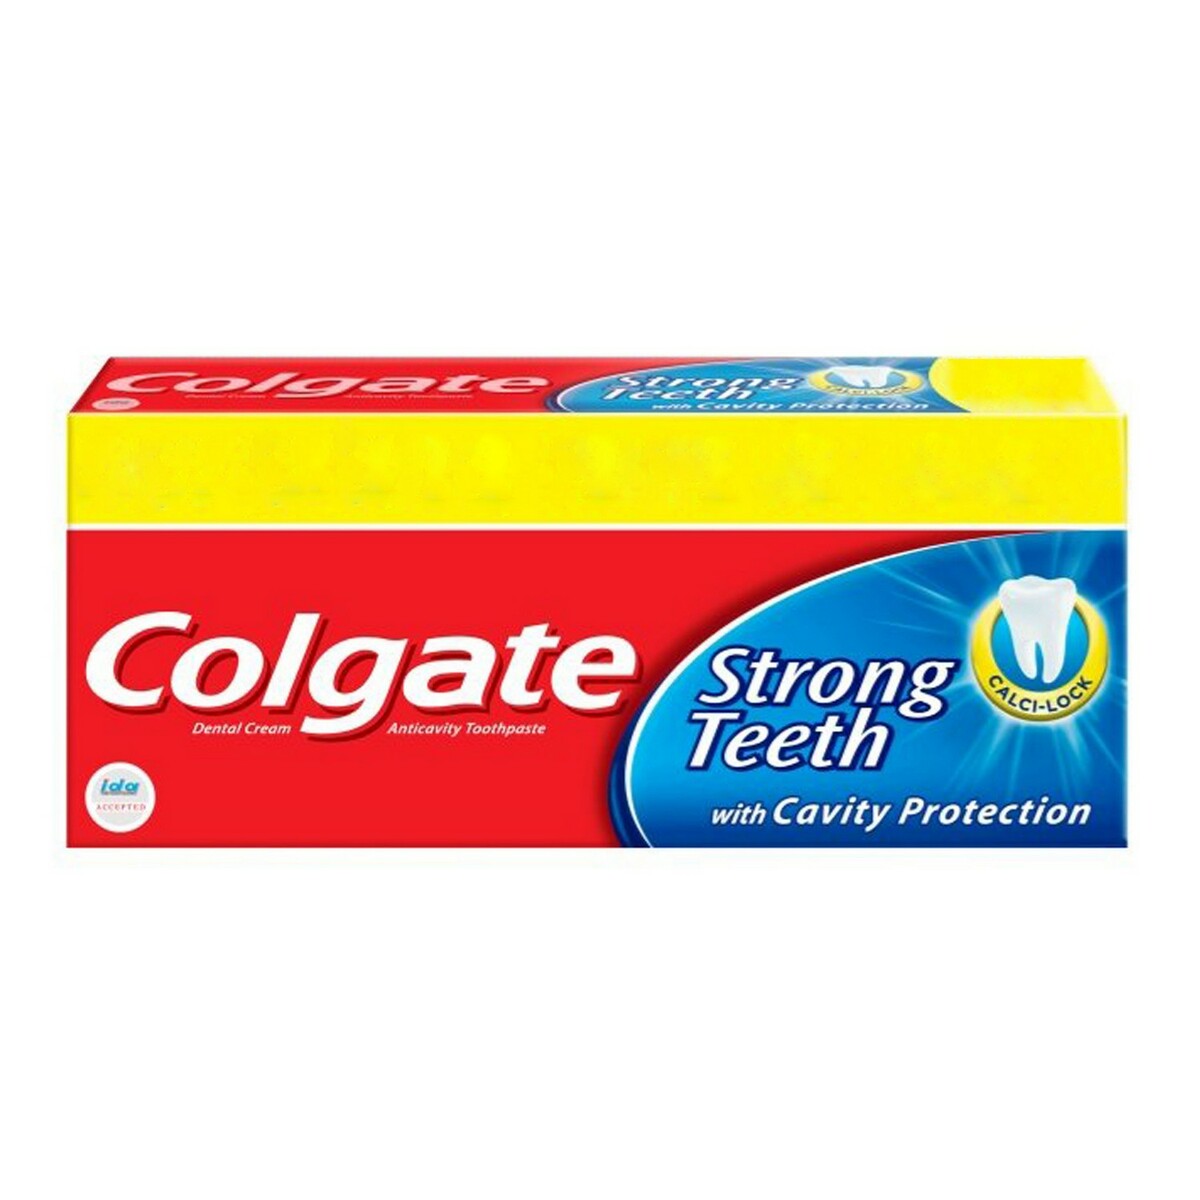 Colgate ToothPaste CDC 200g 2's+100g